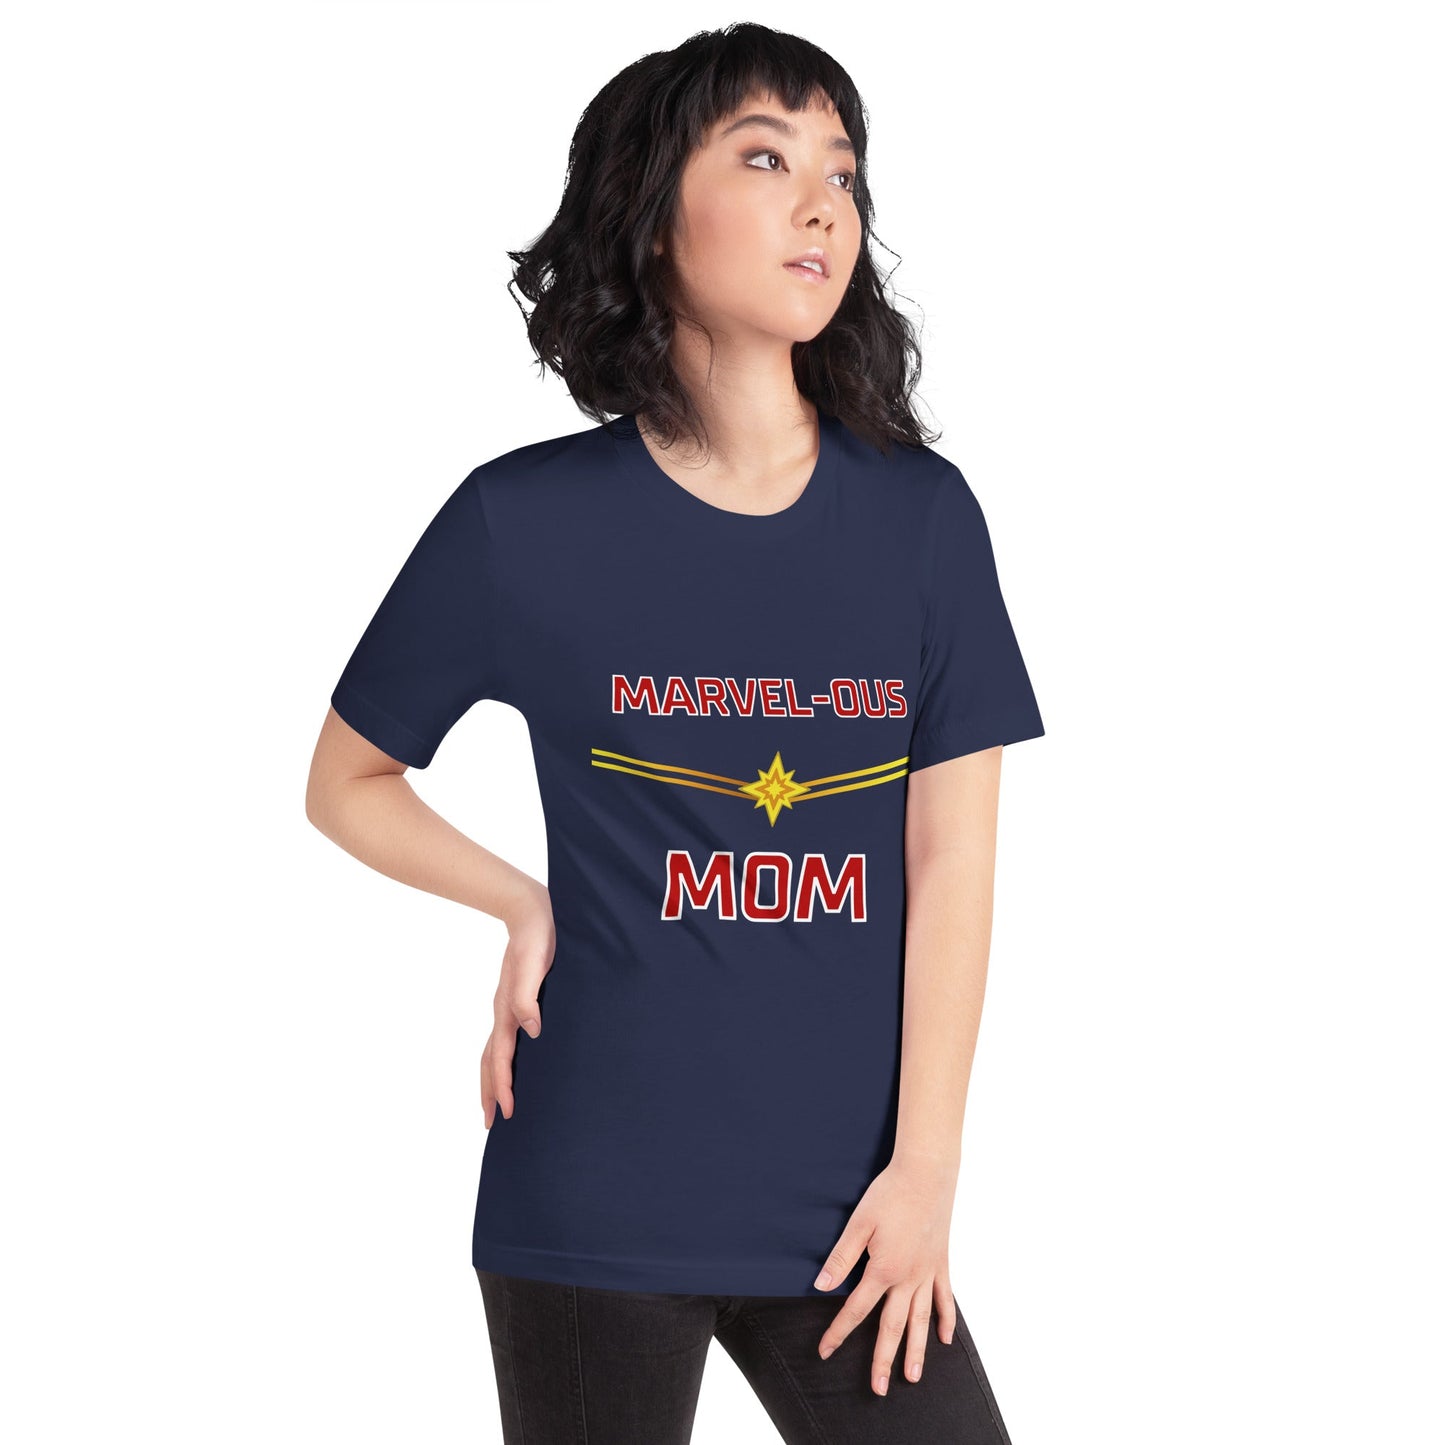 Marvelous mom superhero Mother’s Day shirt! Unisex t-shirt avengers styleCaptain marvelDisney park style#tag4##tag5##tag6#